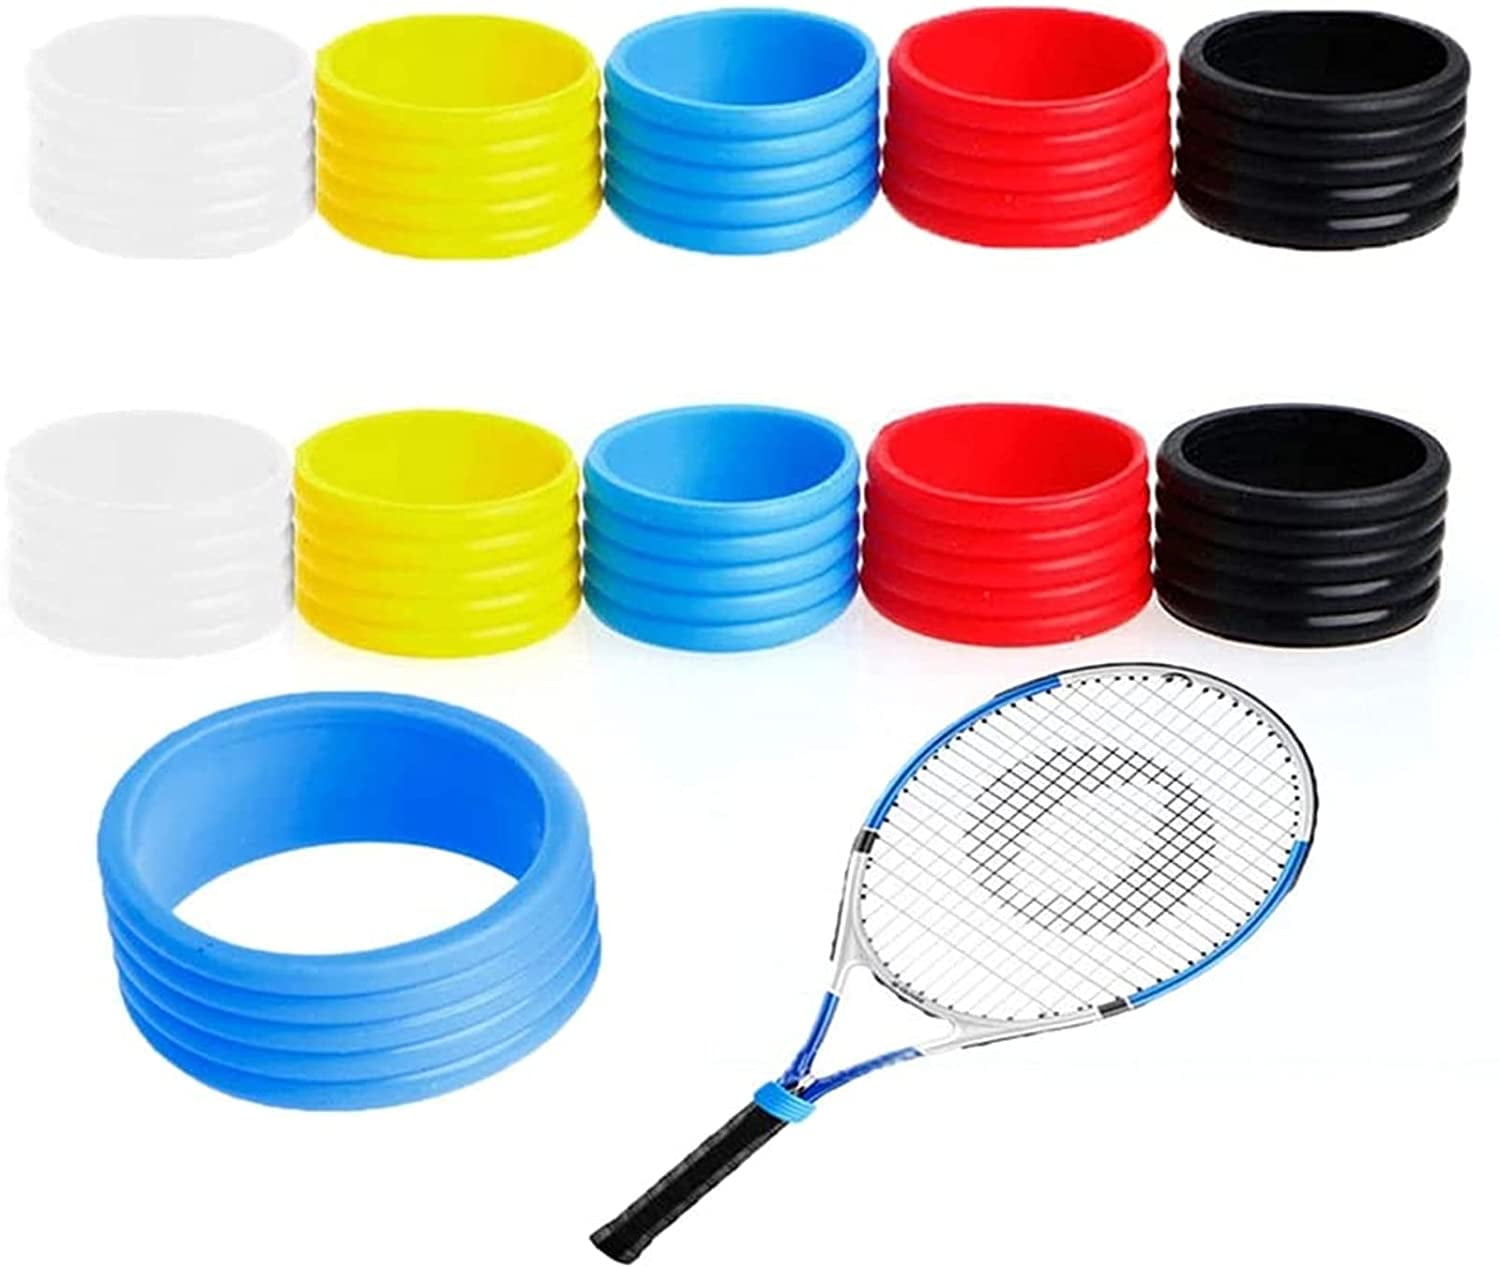 Anti Slip Overgrip Tape Roll Badminton Squash Tennis Racket Grip Tapes SK 